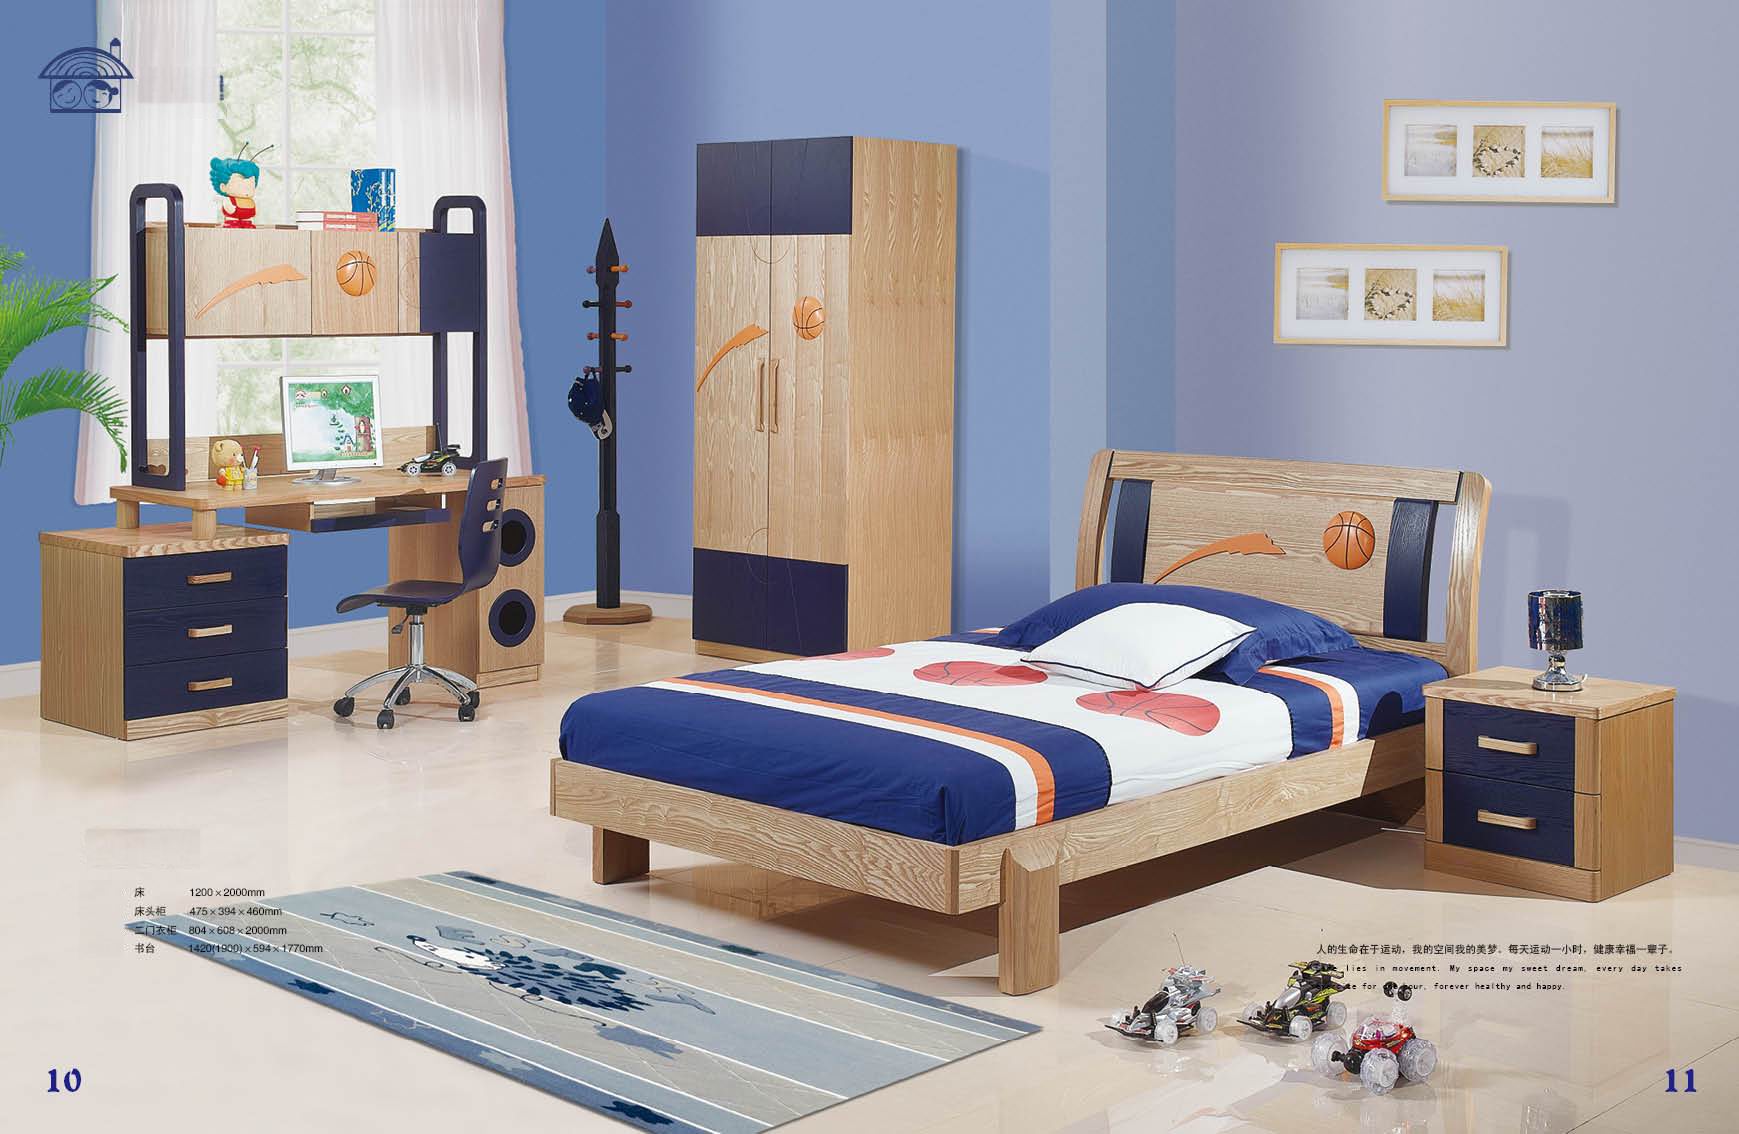 Furniture companies focusing on kids bedroom sets